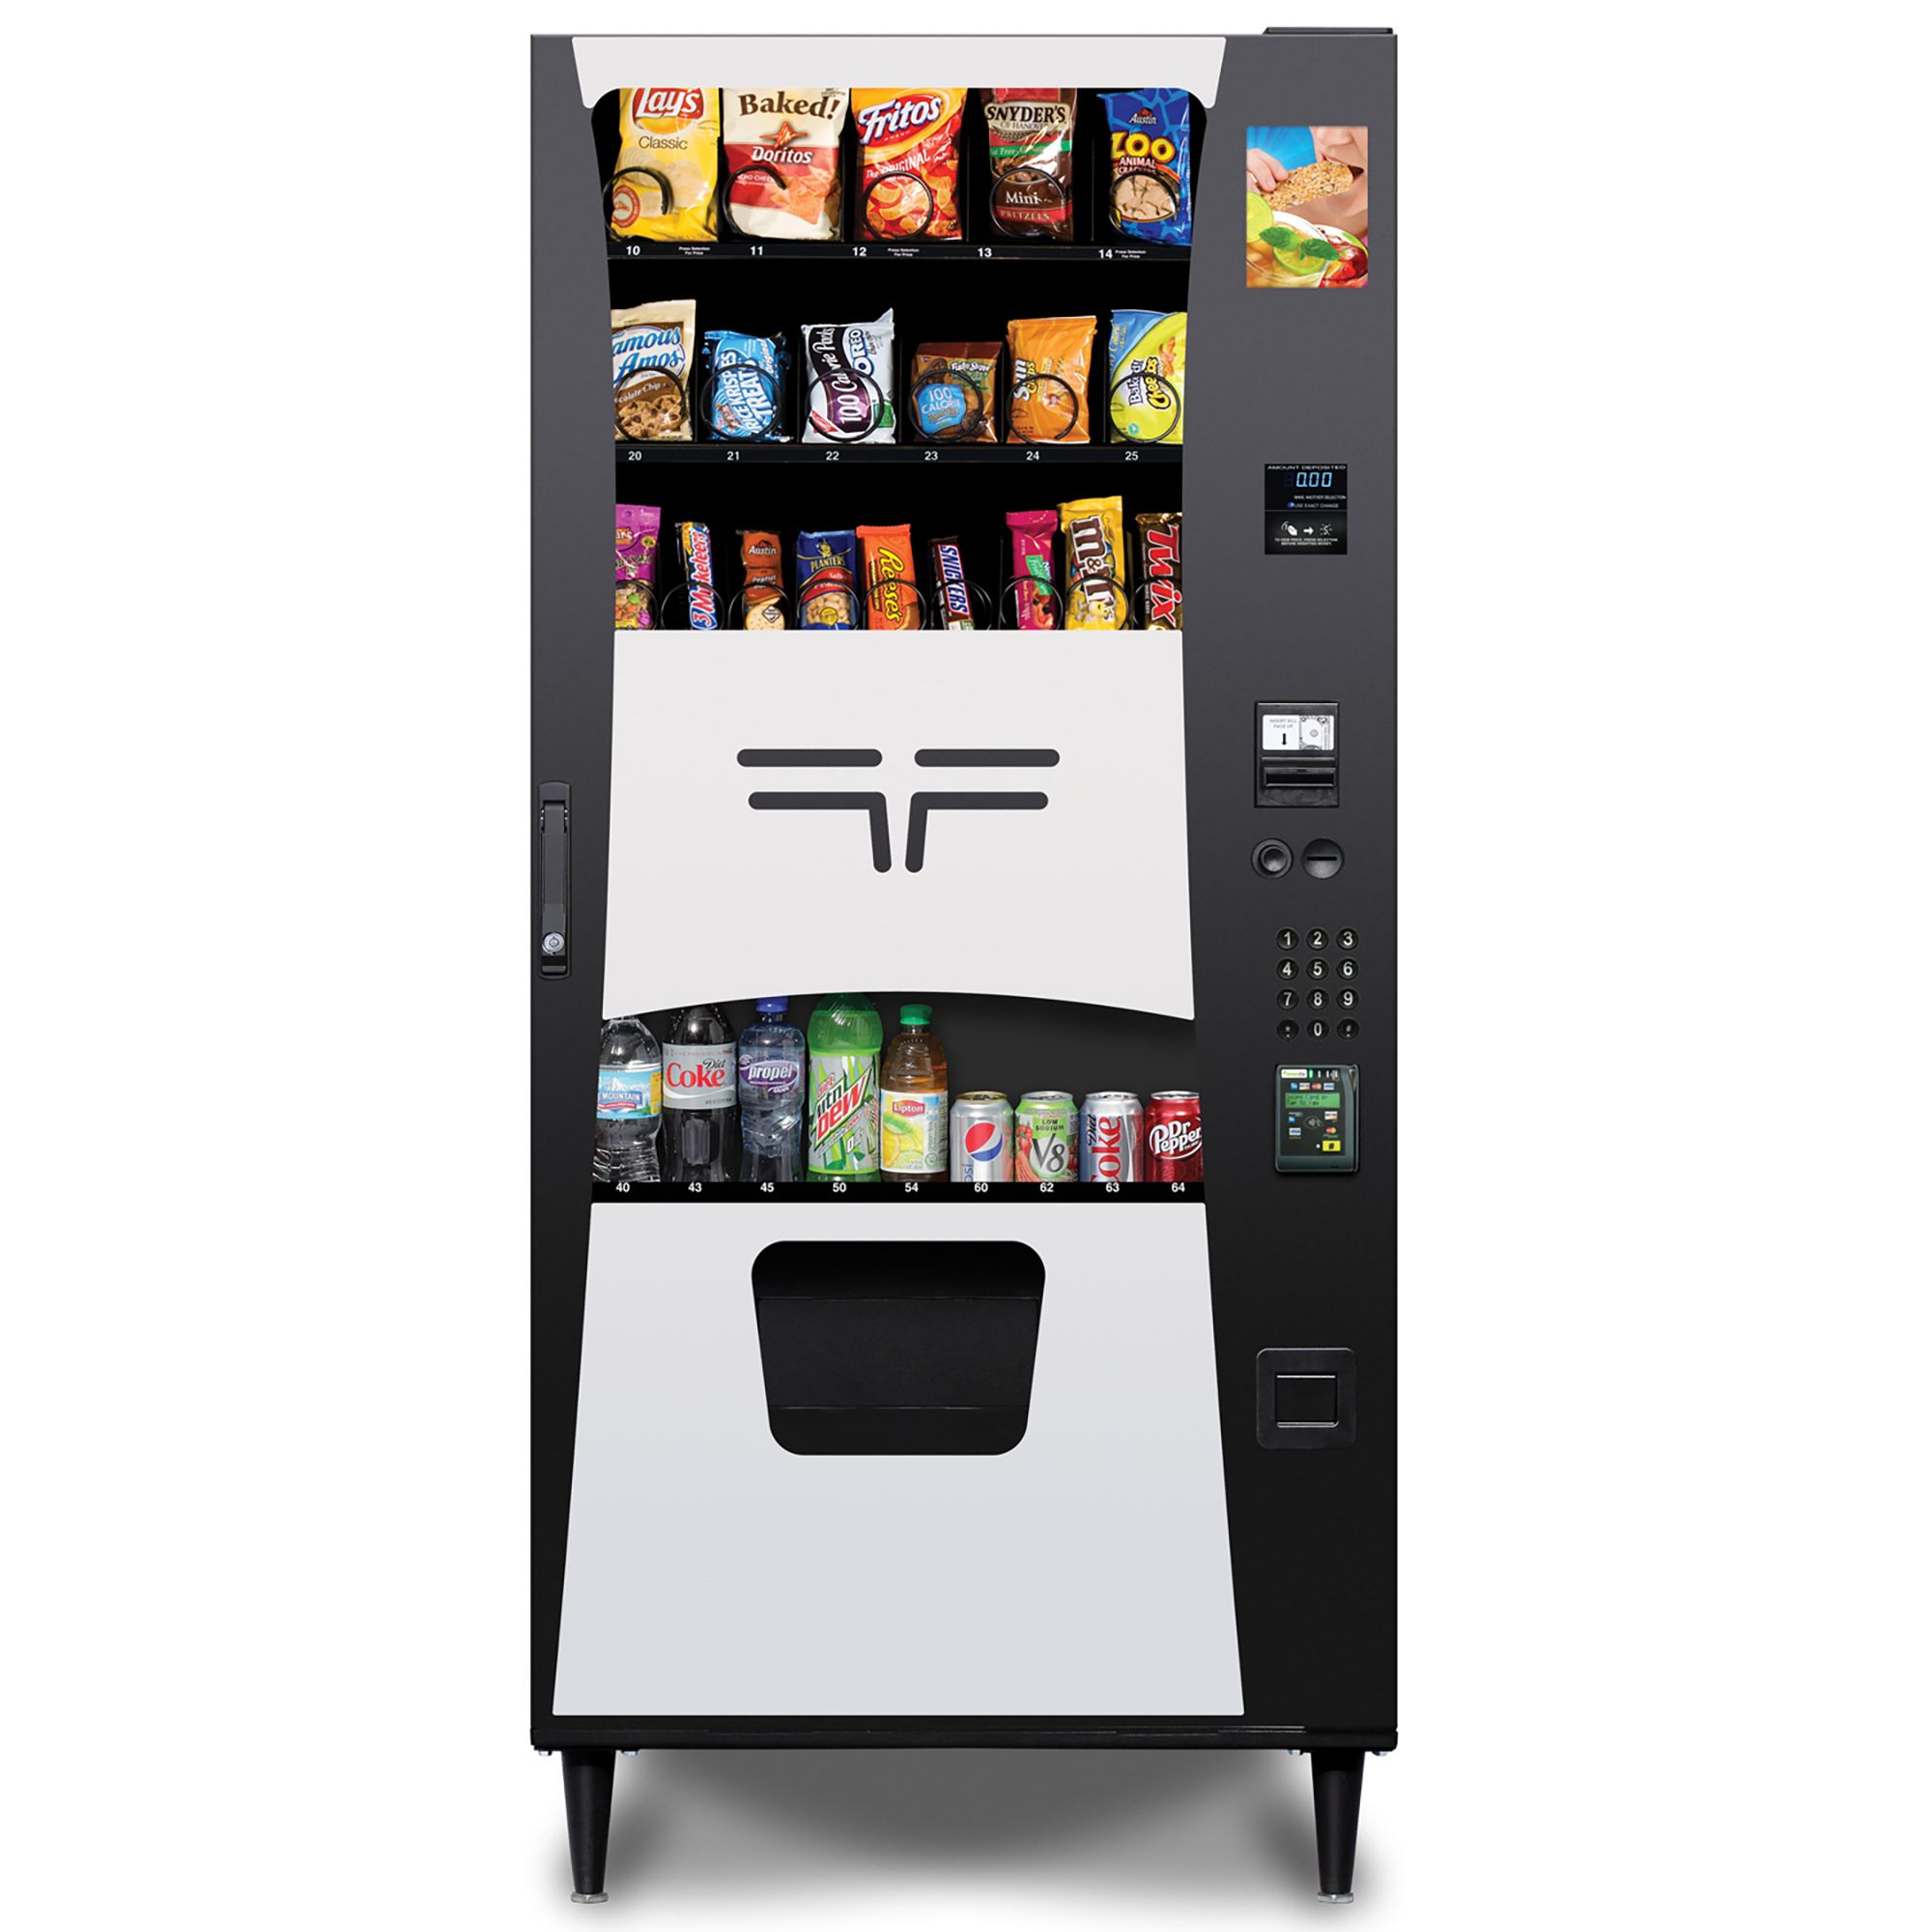 Selectivend WS4000 32 Selection Snack Vending Machine - Sam's Club